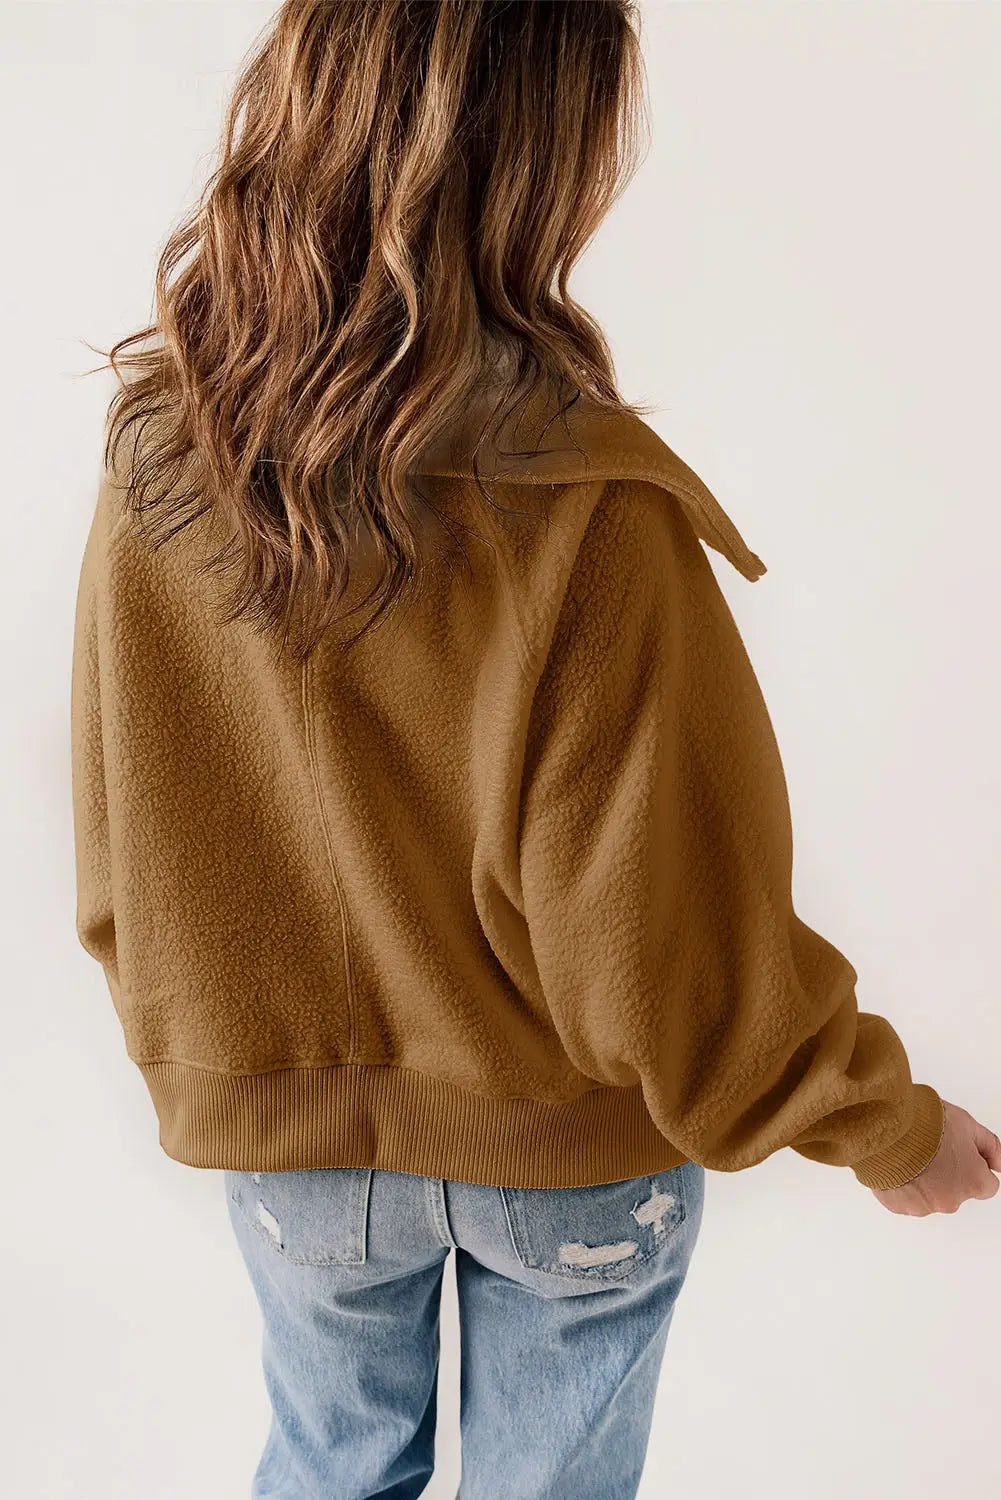 Brown button flap pocket spread collar fleece jacket - outerwear